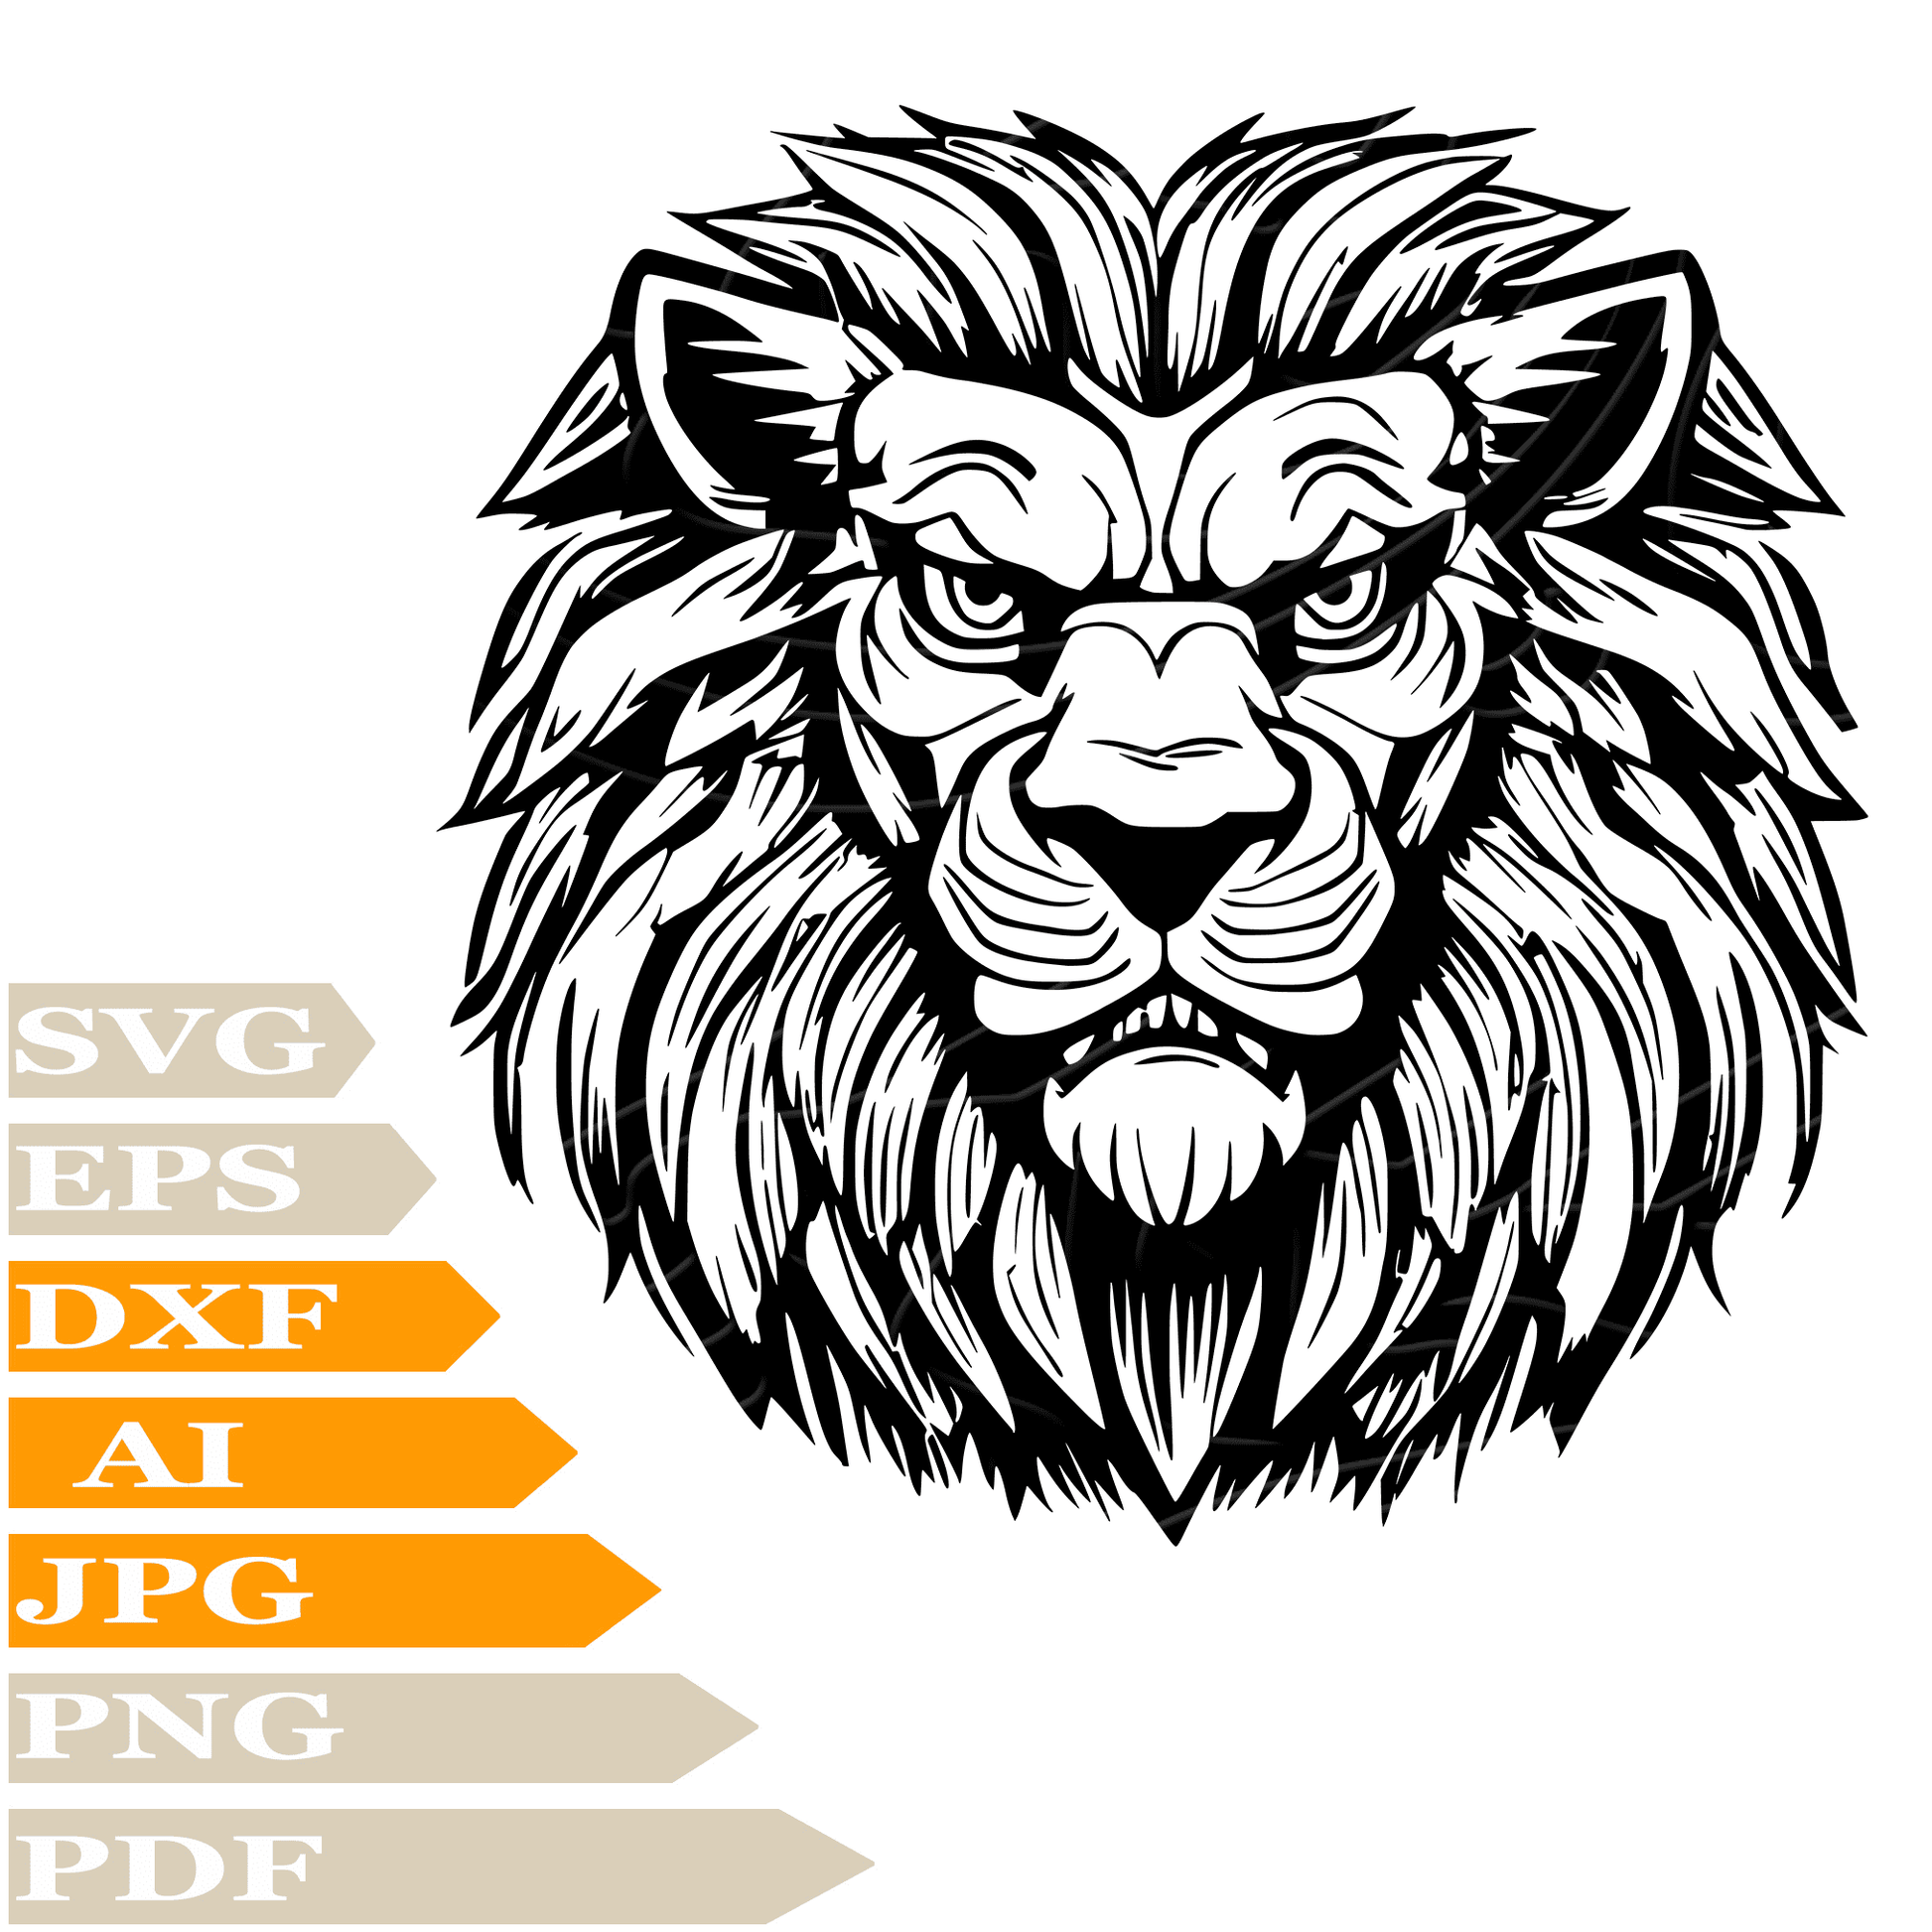 Sogvintage-Lion SVG-Wild Lion SVG Design-Lion Head SVG File-Wild Lion Face Digital Vector Download-Lion Head PNG-King Animals Lion For Cricut-Lion Clip art-Lion Face Cut File-Lion Head T-Shirt-Lion Wall Sticker-Wild Lion For Tattoo-Lion Printable-Wild Lion Head Silhouette